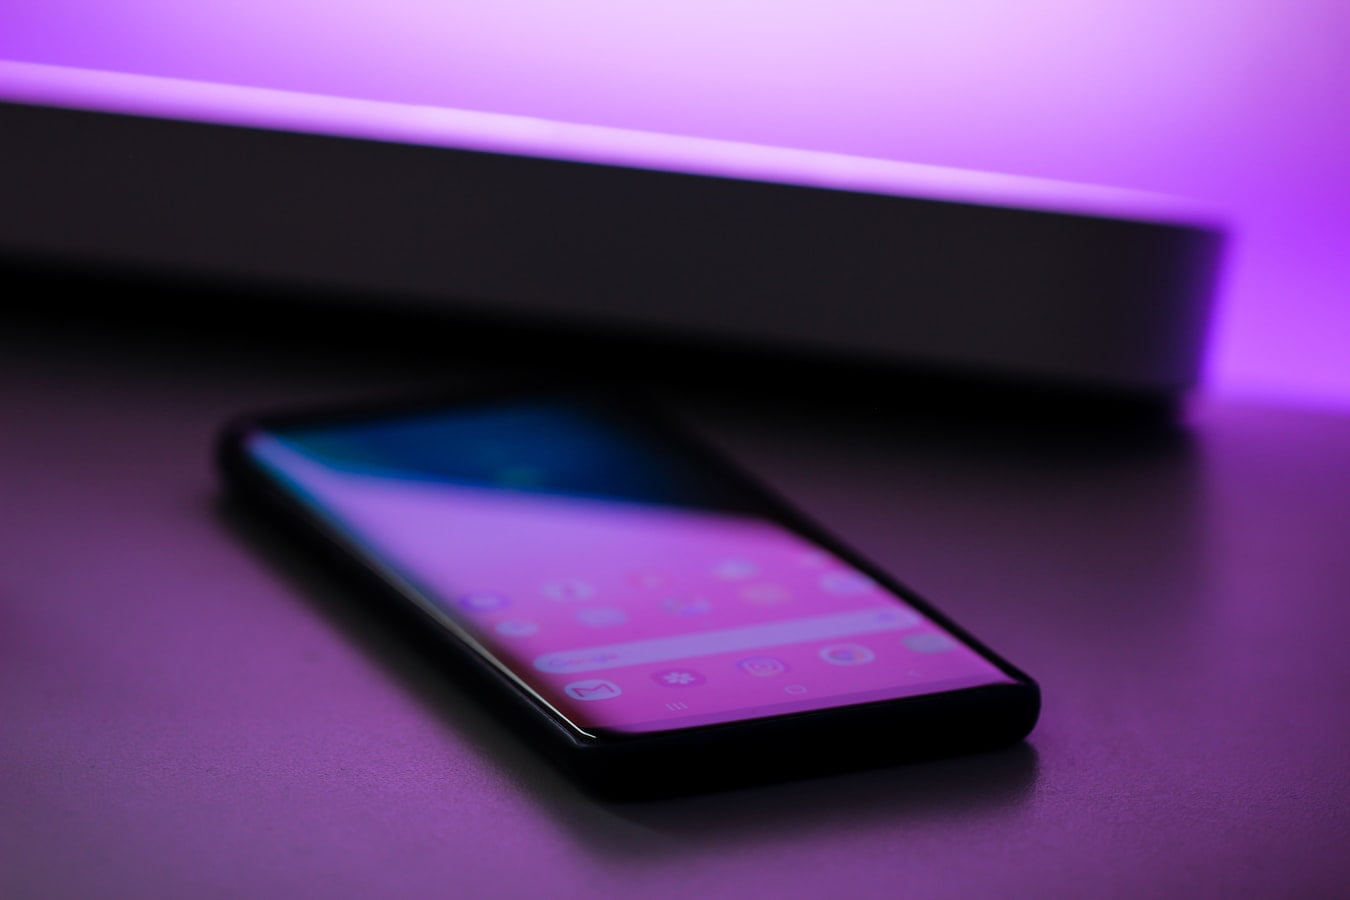 Phone on desk with glare